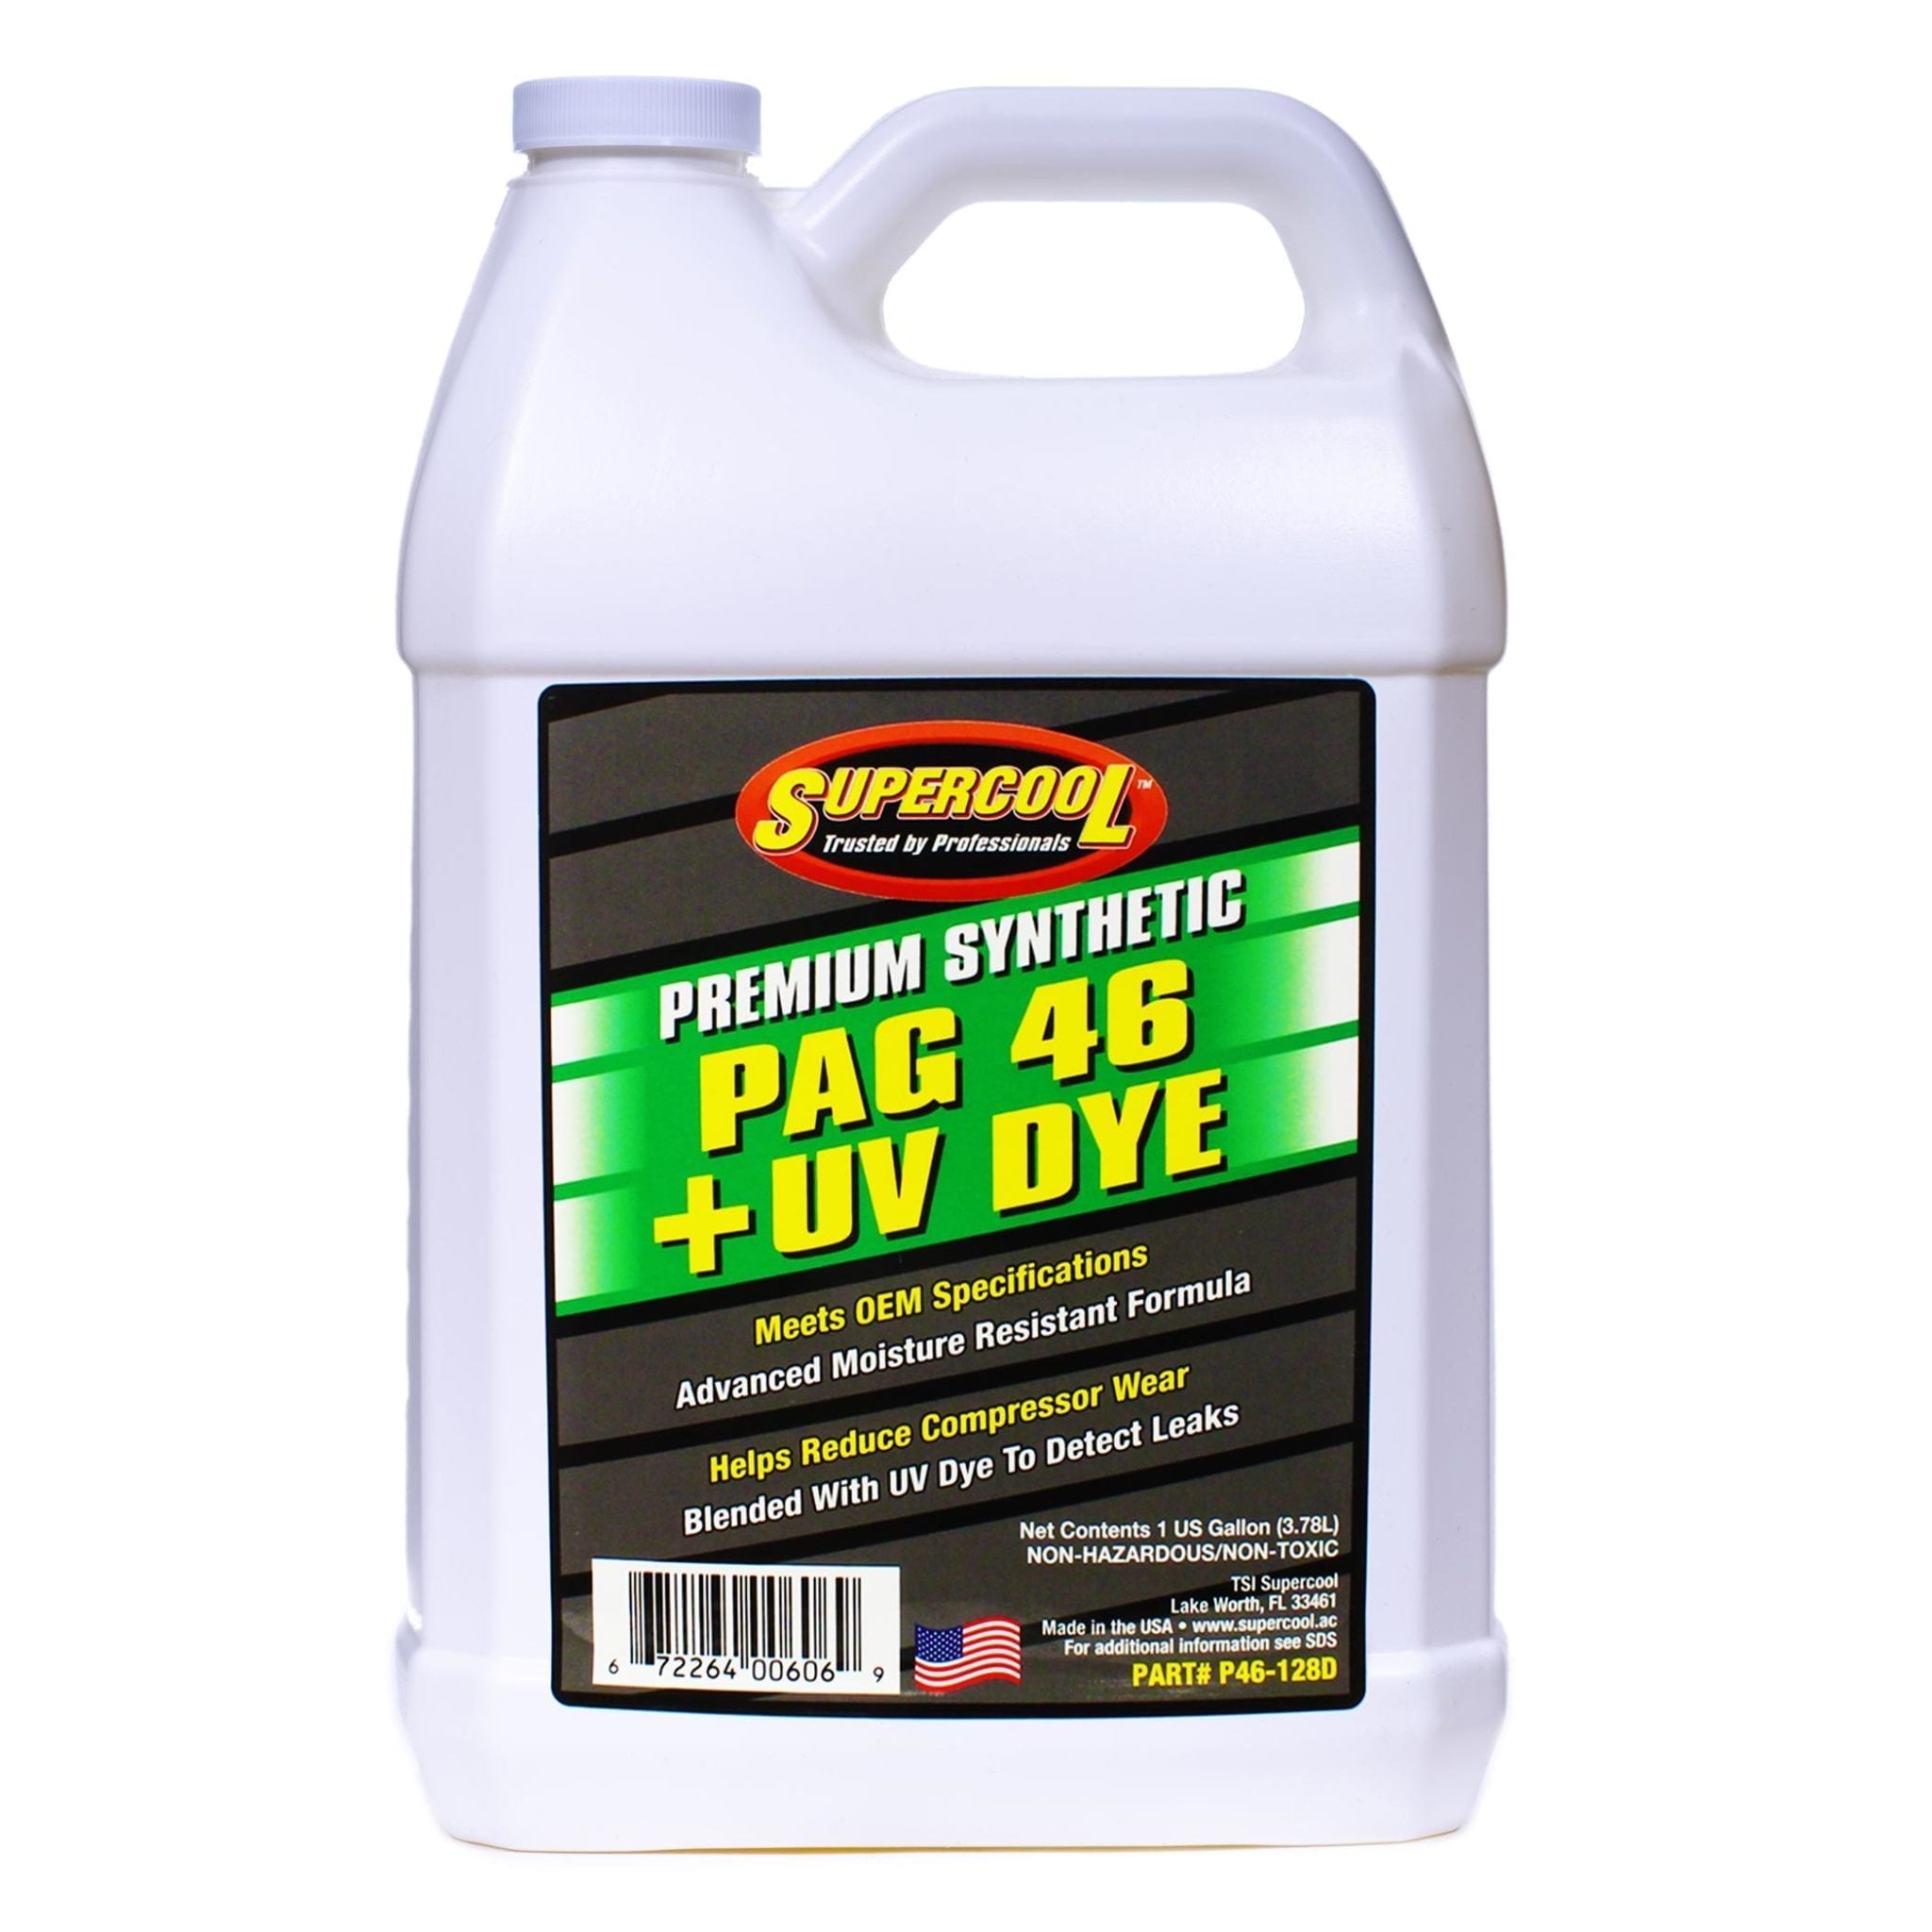 W/Uv Dye Plastic Bottle 672264001613 Supercool P46-8D A/C Compressor Pag Lubricant